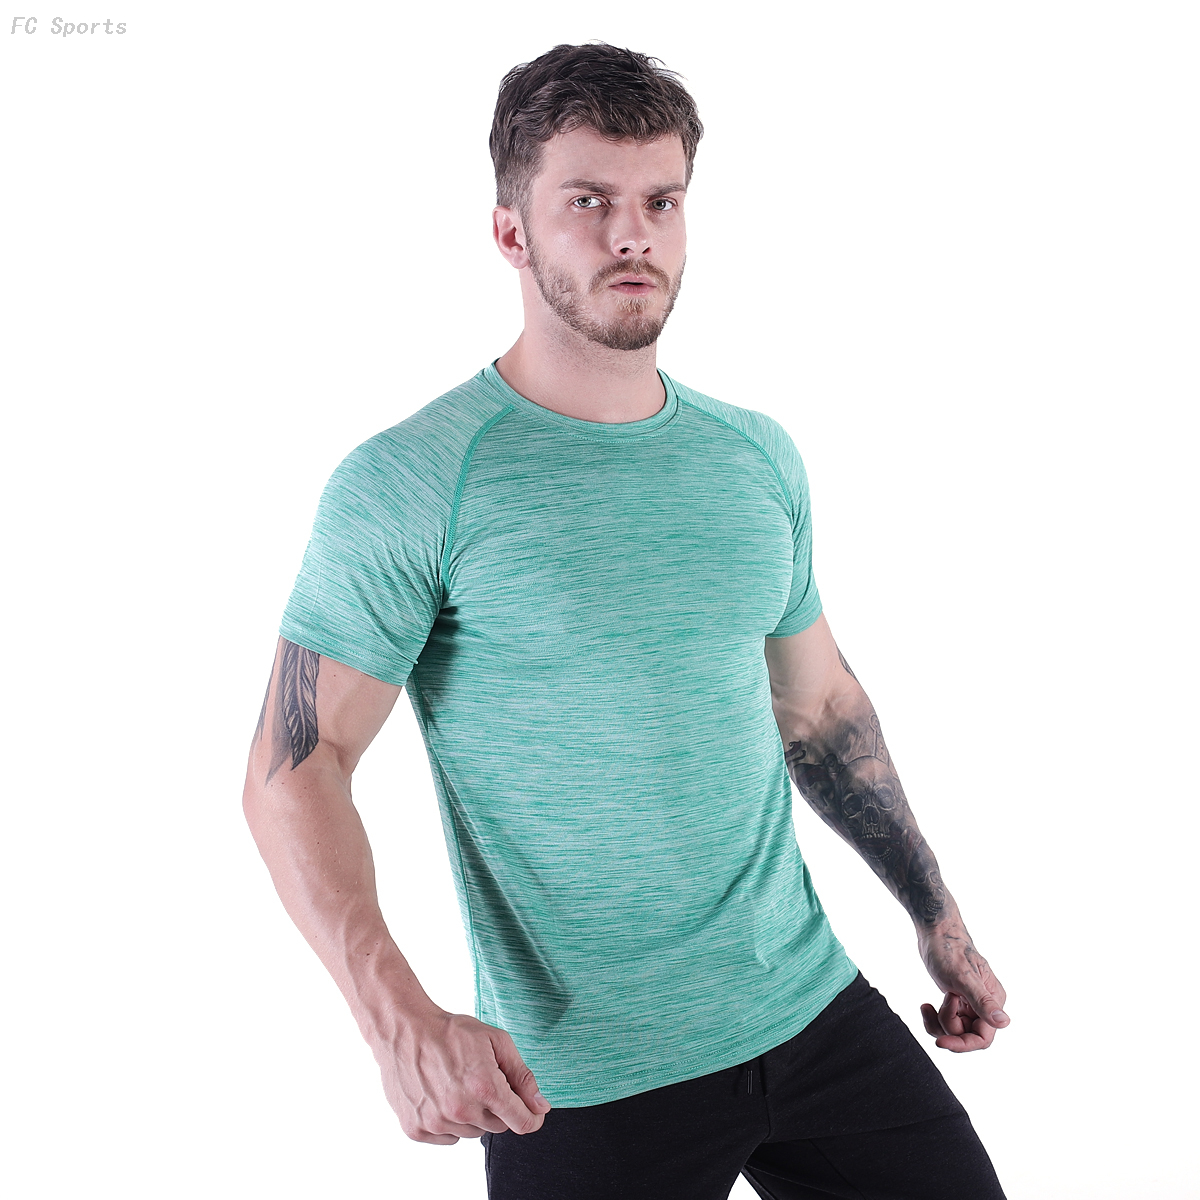 FC Sports Gym Yoga Train Wear Running Garments Men Clothing Tee Shirts Round Neck Print Tops 